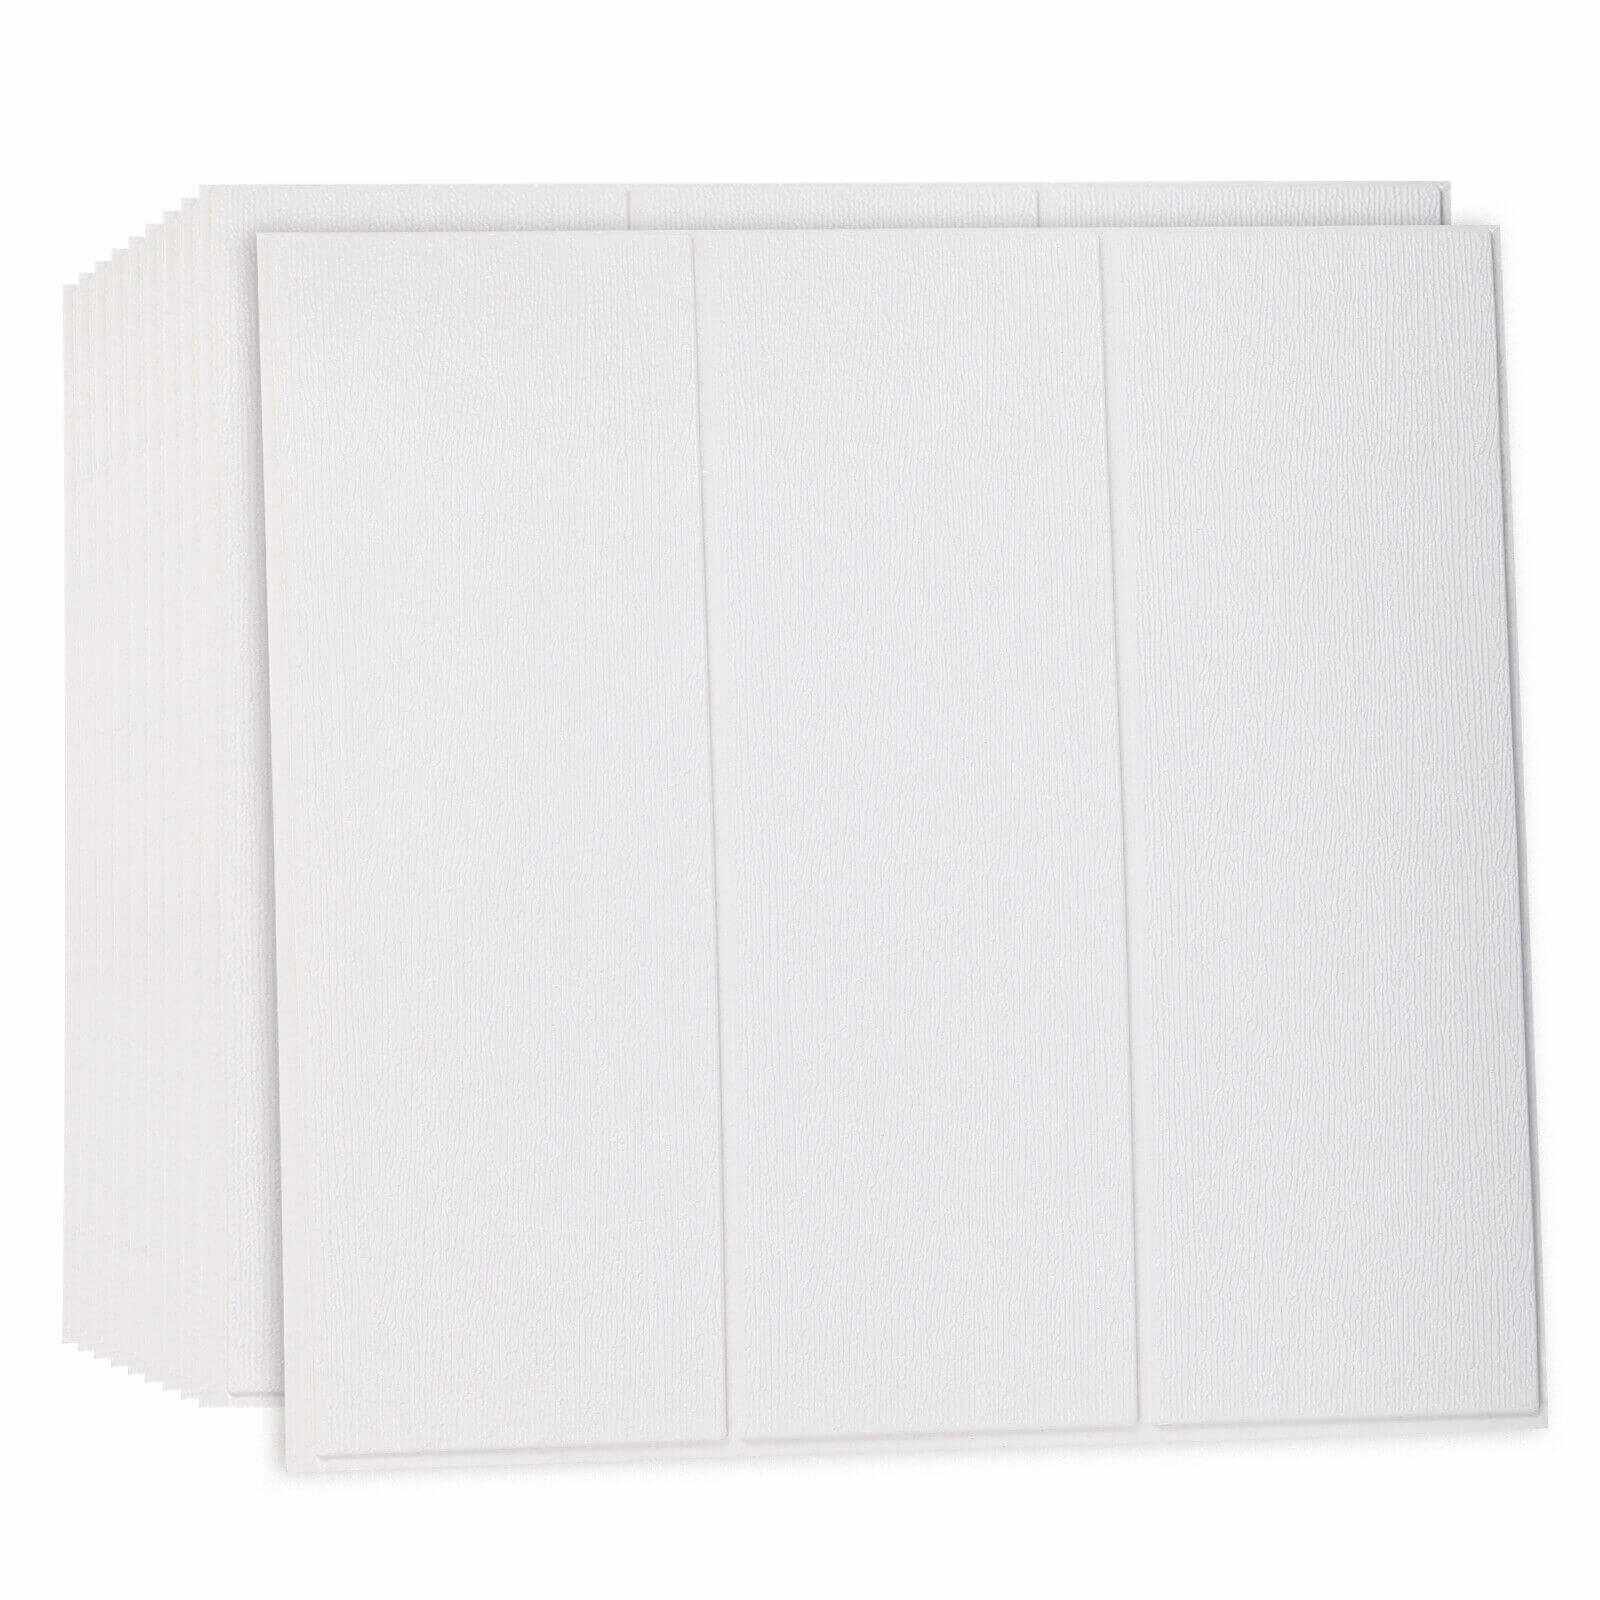 White 3D Foam Wall Panels Brick Wood Wallpaper